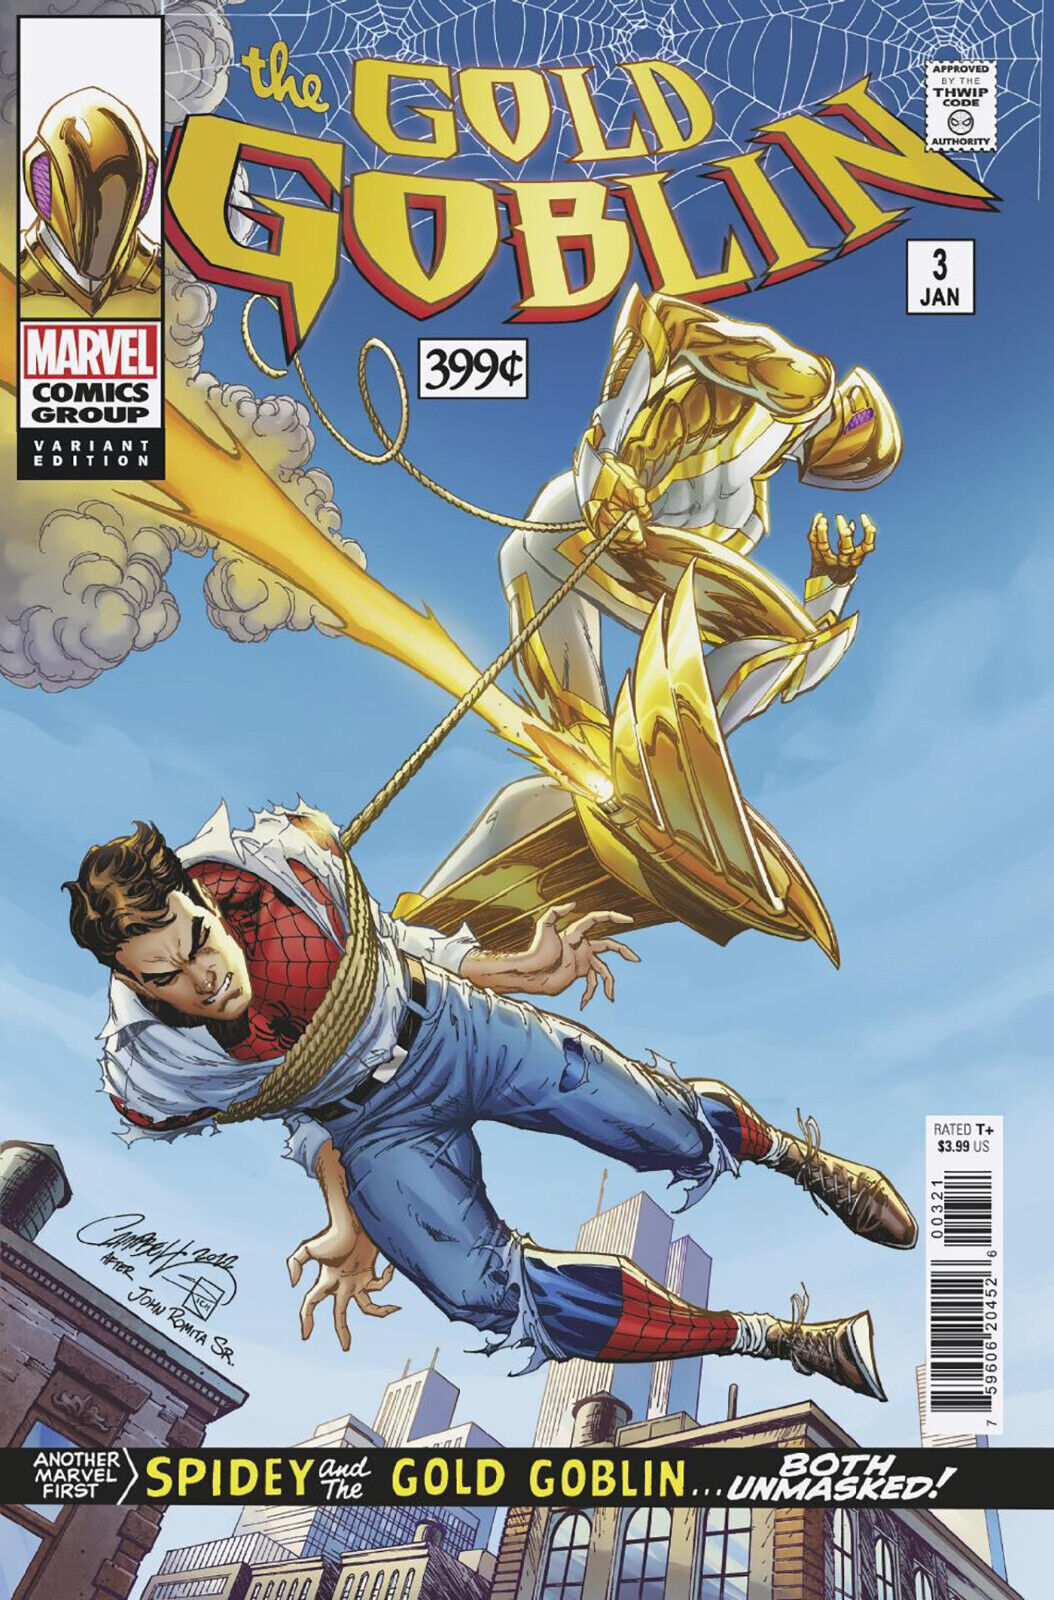 GOLD GOBLIN #3 (J. SCOTT CAMPBELL ASM #39 HOMAGE VARIANT) COMIC BOOK ~ Marvel